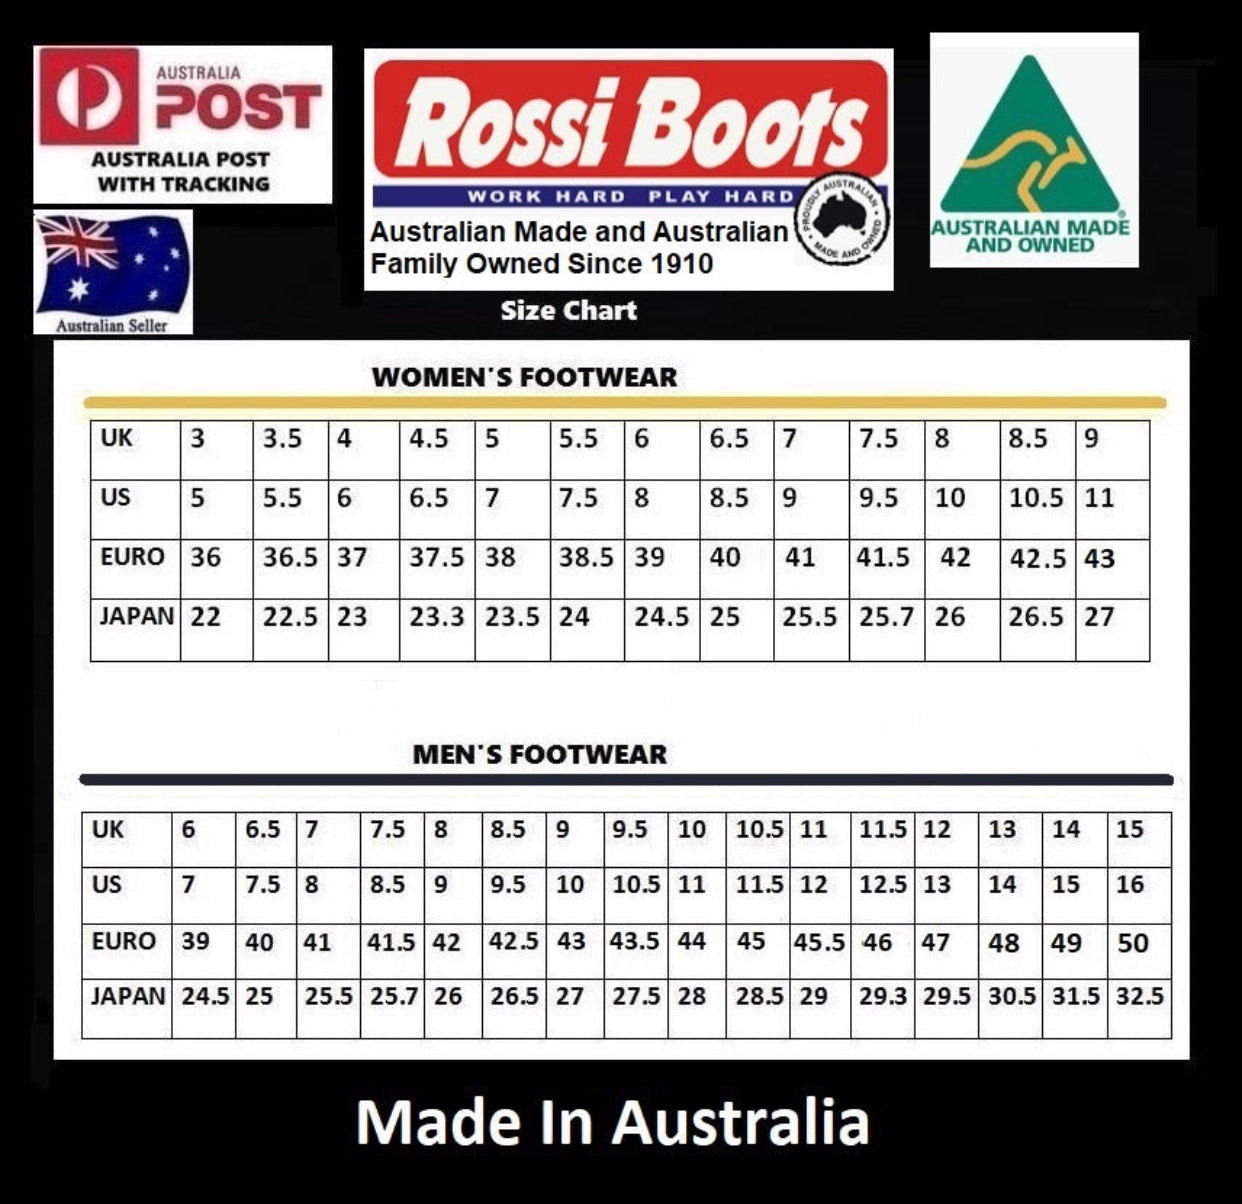 Rossi Boots 303 Endura Tan Soft Toe Chelsea Boot Made In Australia